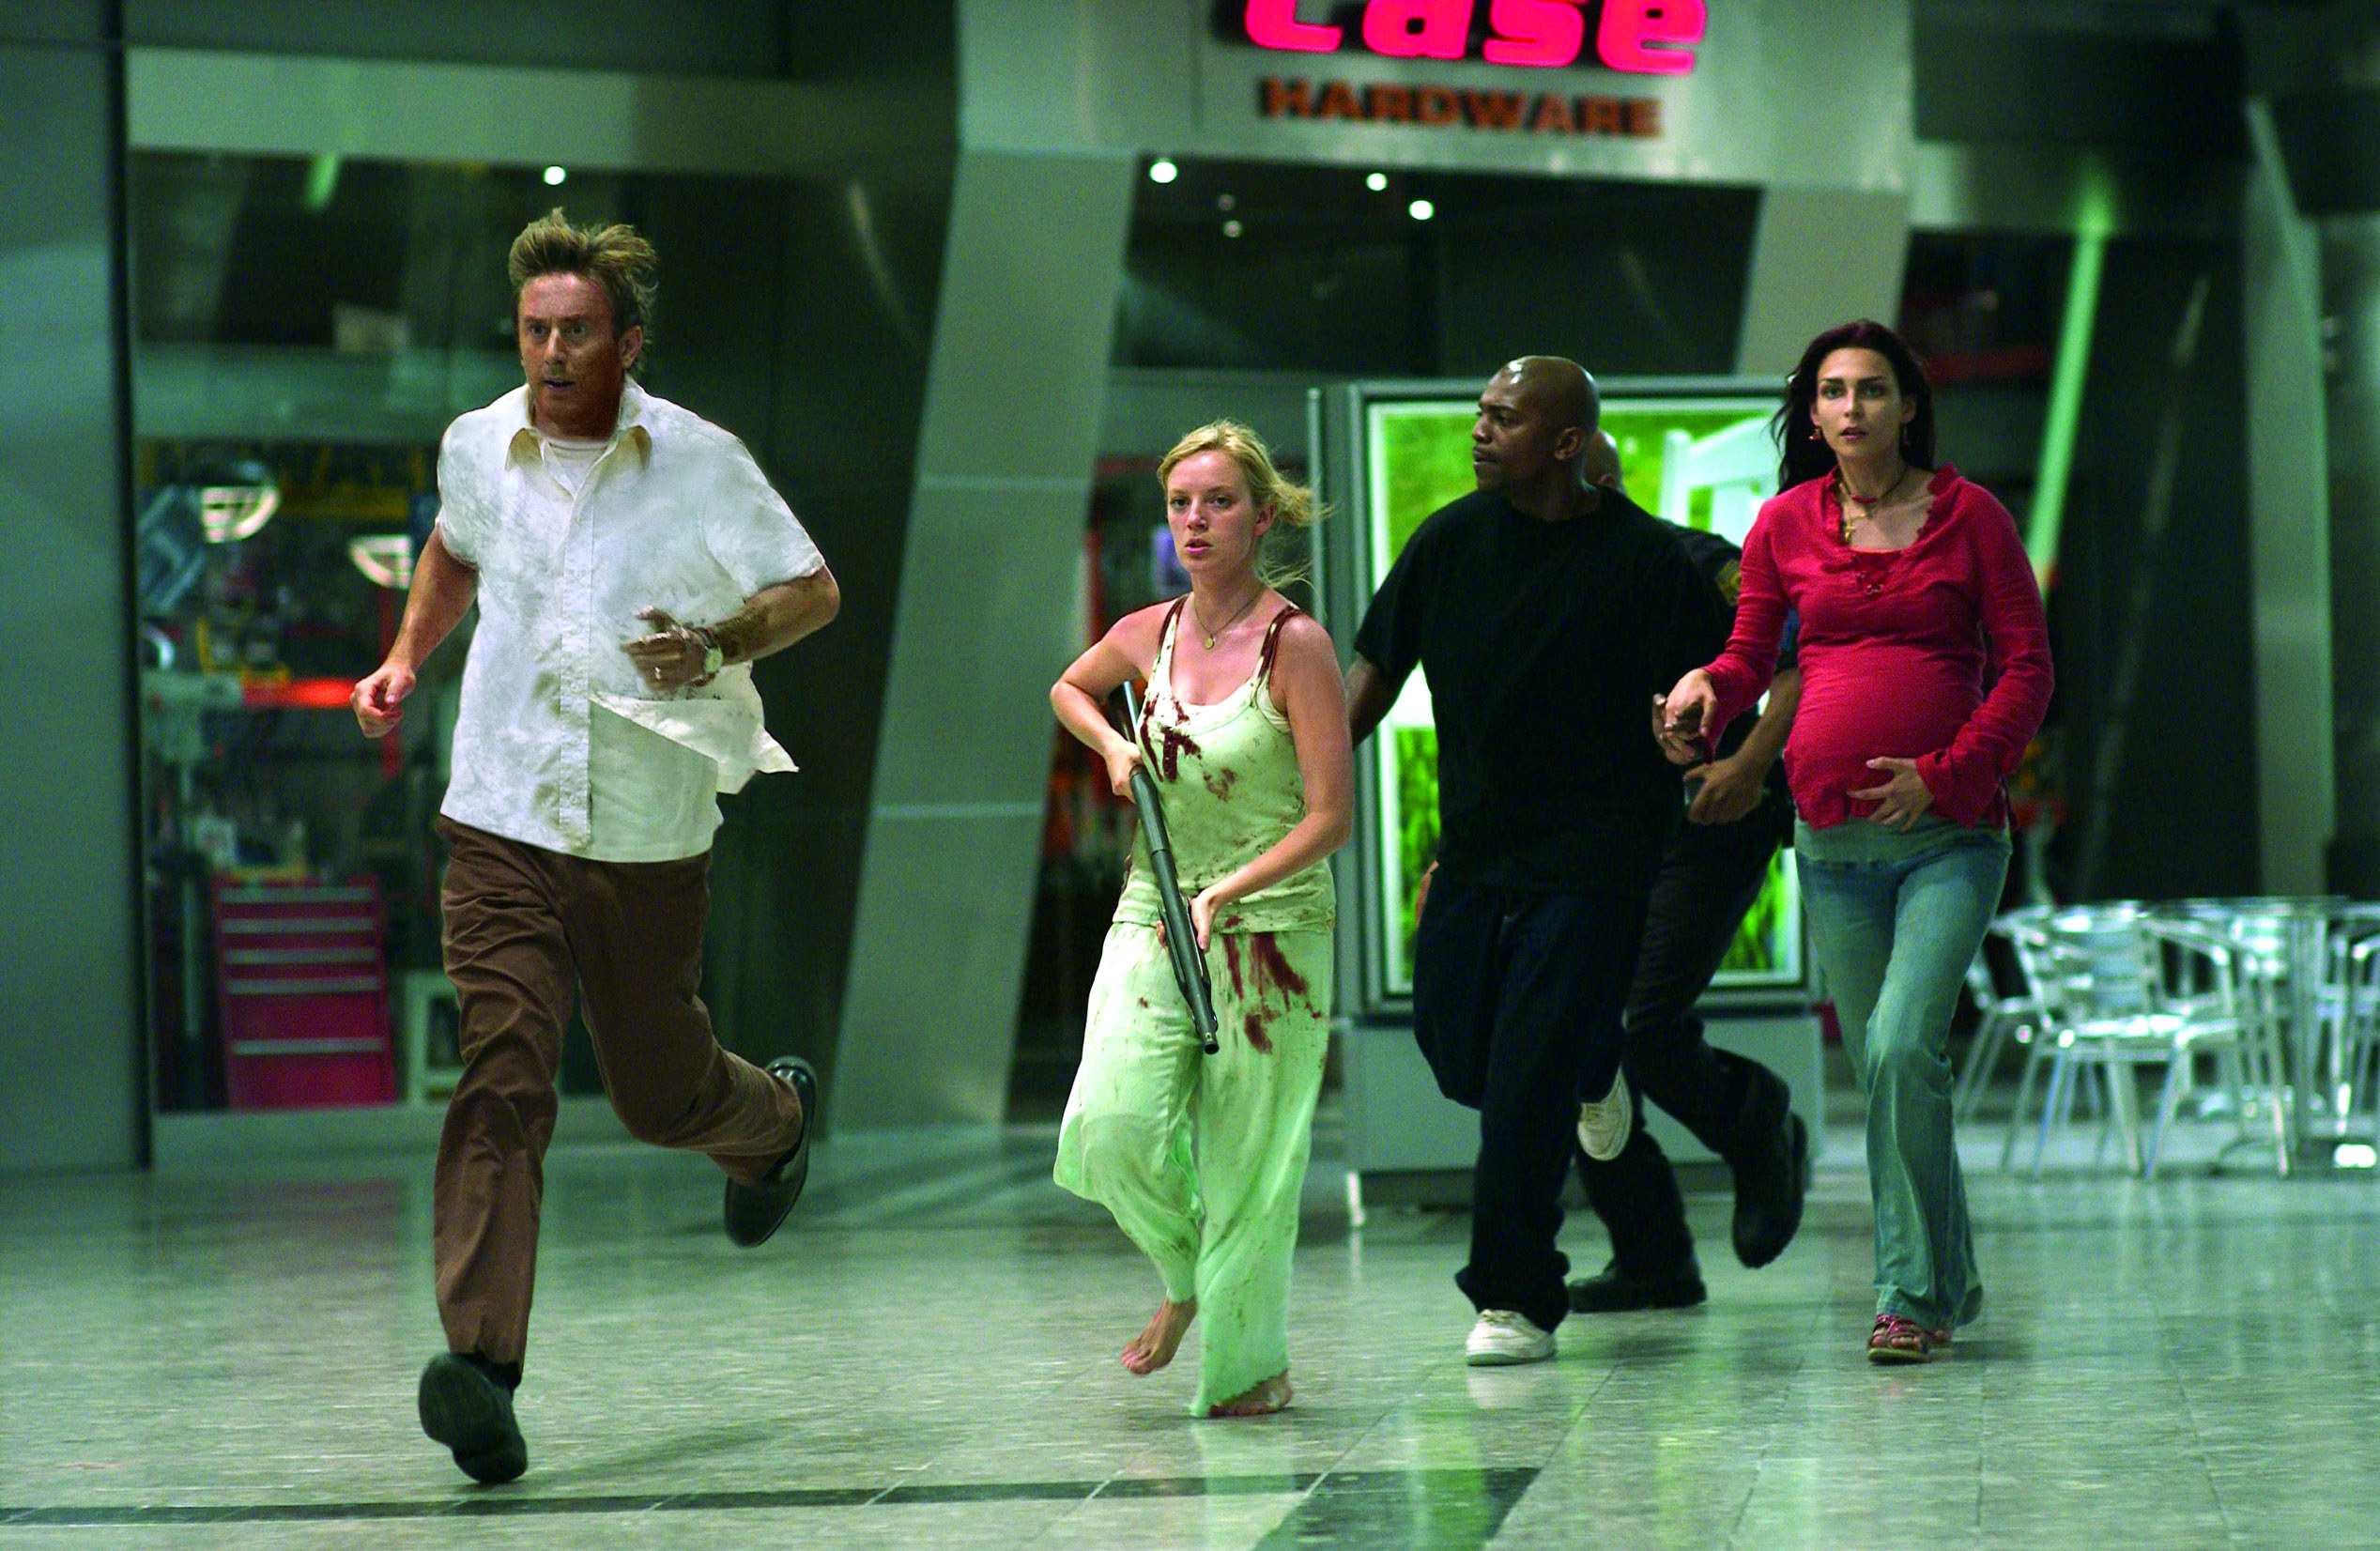 Jake Weber, Sarah Polley, Mekhi Phifer, and Inna Korobkina run through a mall